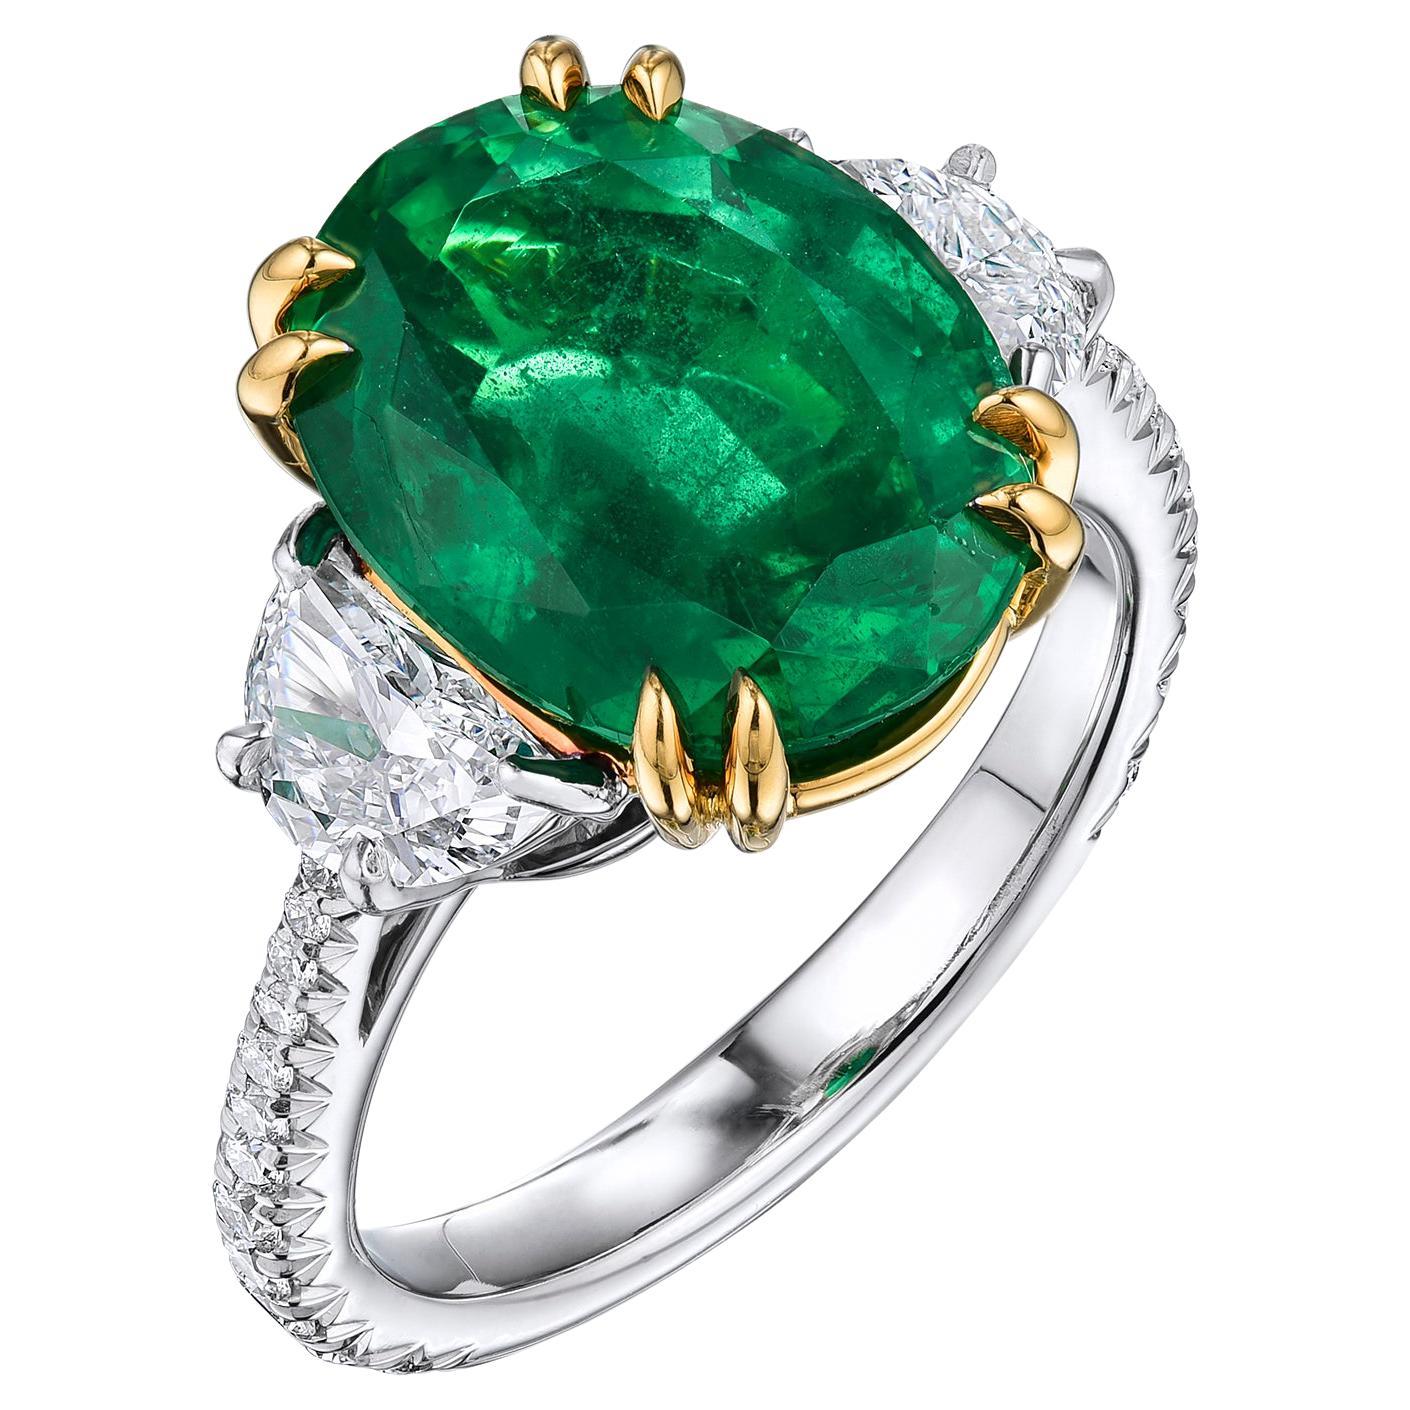 Ovaler Cocktail-/Engagement-Ring aus Platin mit 5,72 Karat grünem Smaragd